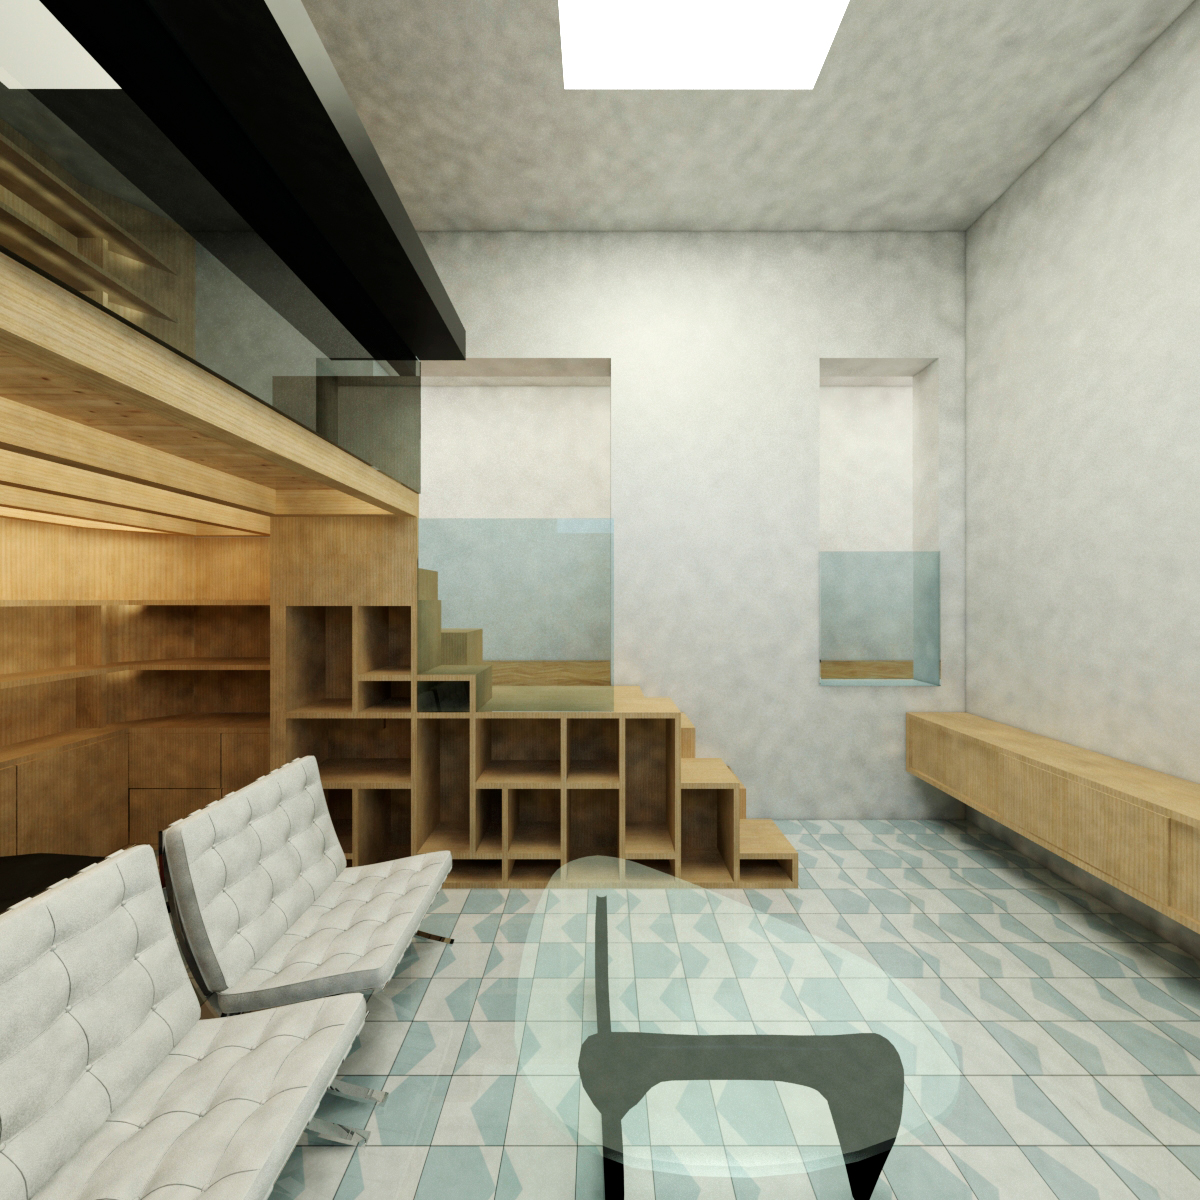 refurbishment cement tiles taylor made wood Lisbon minimal interior design  mezzanine home office overdesign